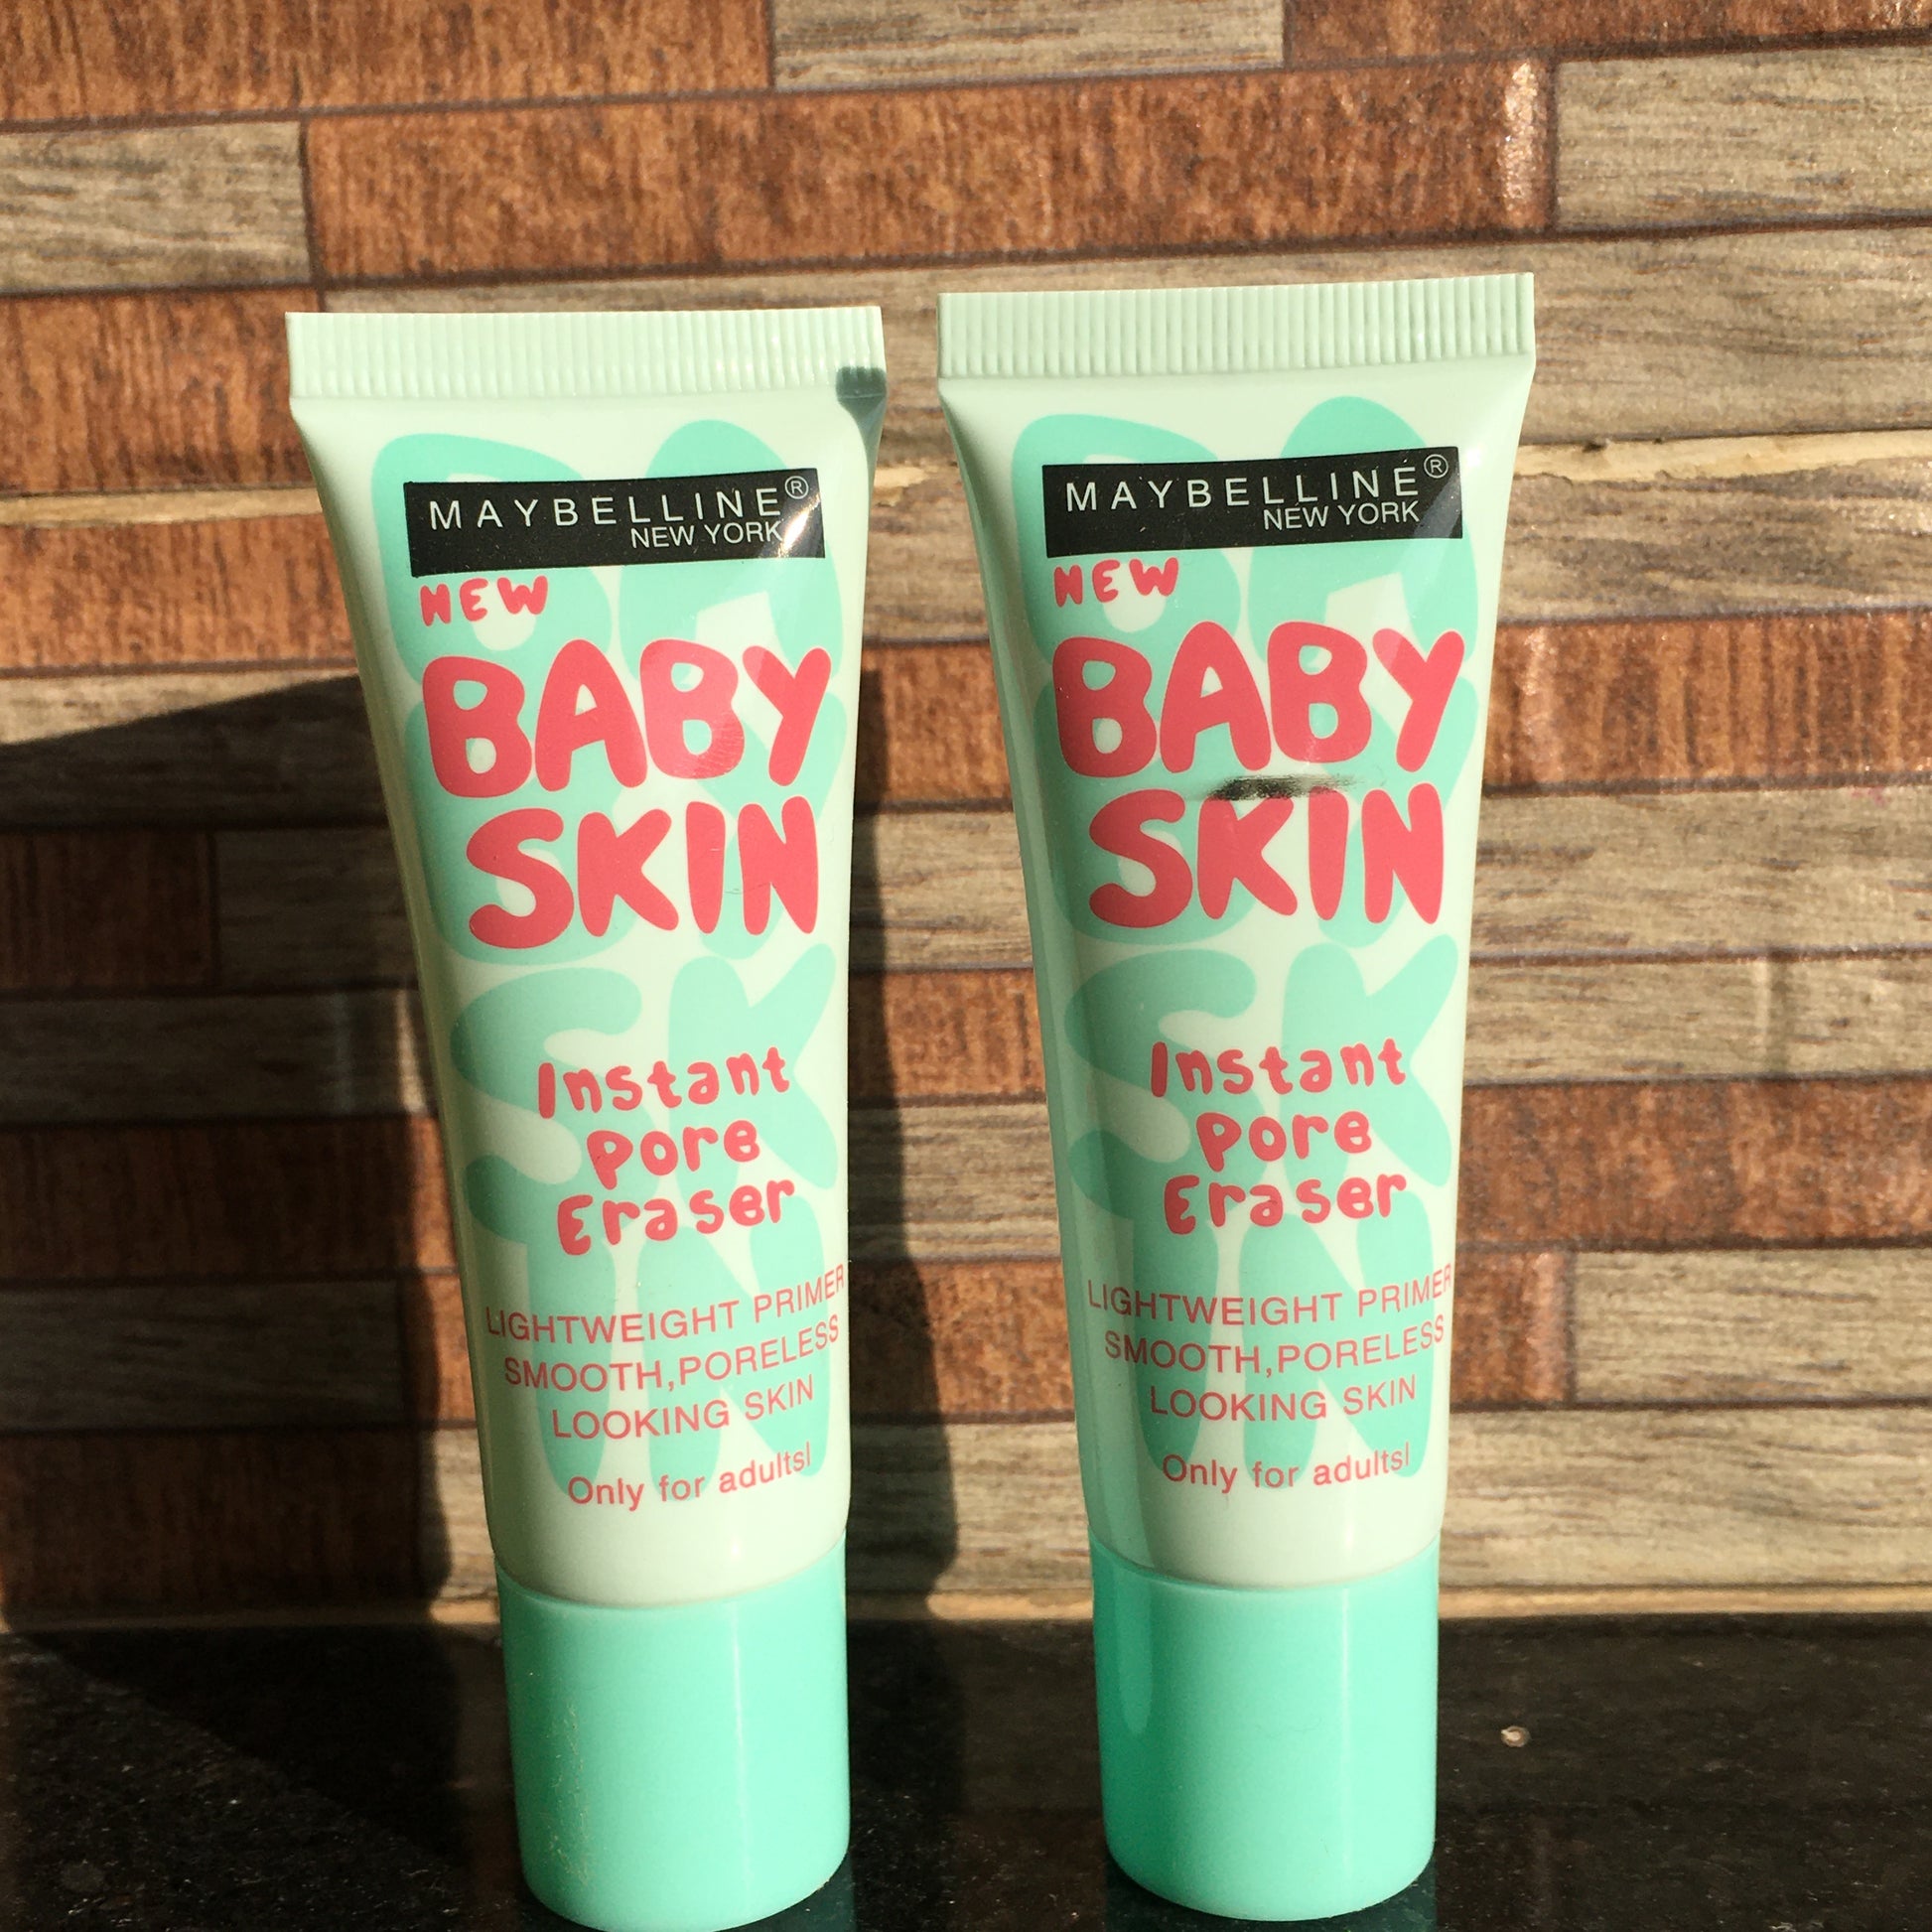 Maybelline primer – Makeup new Online skin Store baby